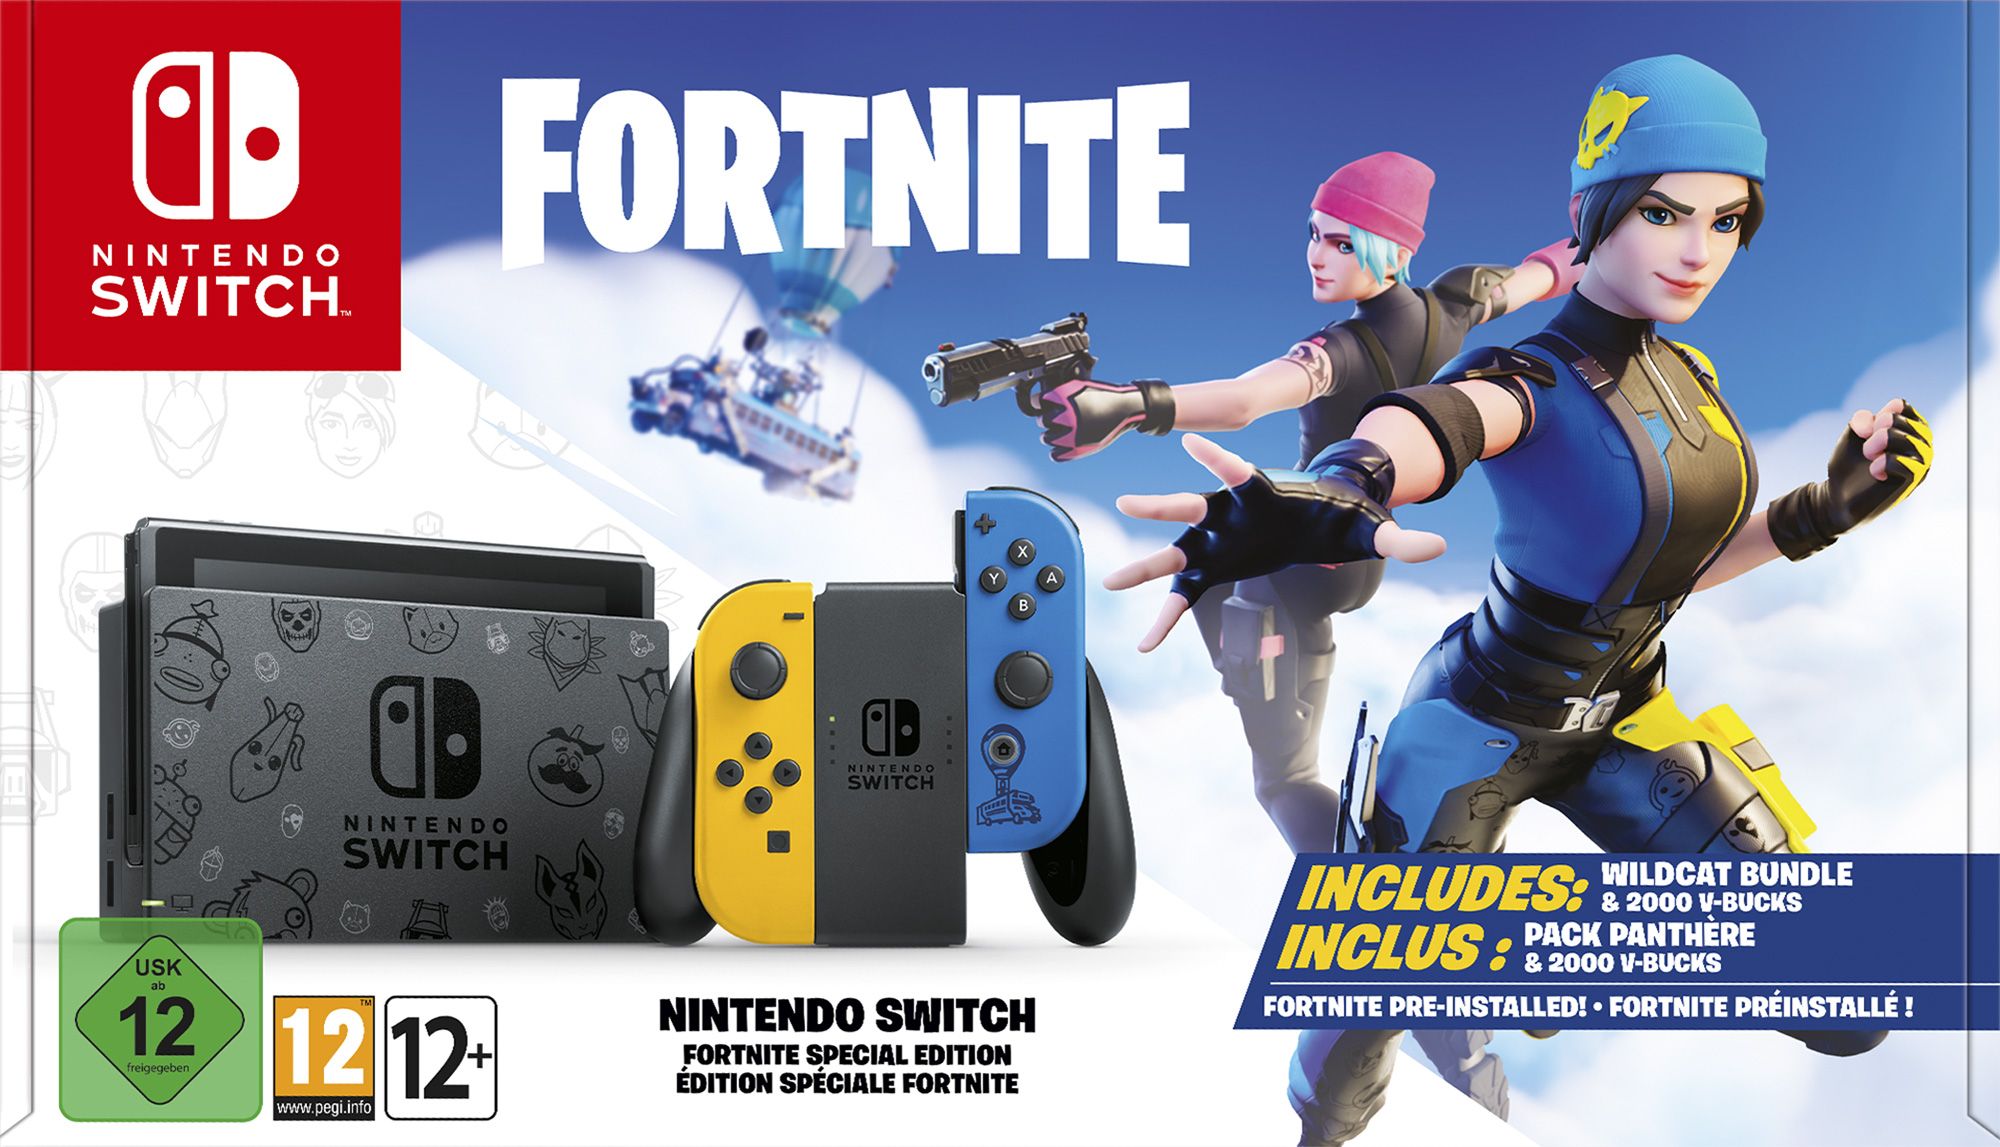 Nintendo Switch Fortnite Special Edition - Fortnite Wild Cat Console Bundle  Code